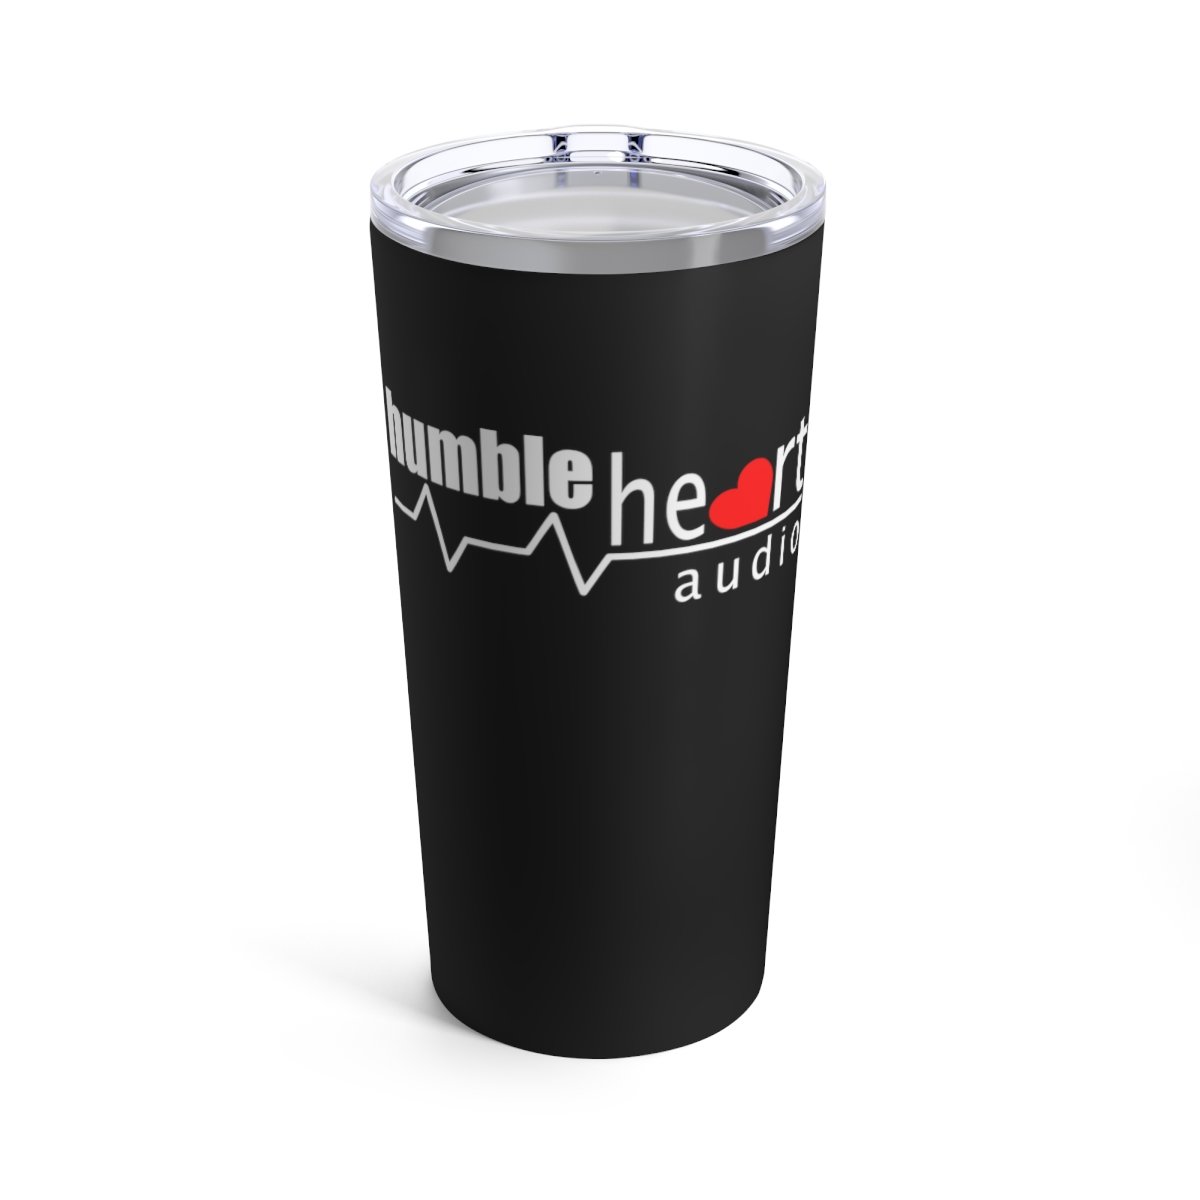 Humble Heart Audio Logo 2 20oz Stainless Steel Tumbler